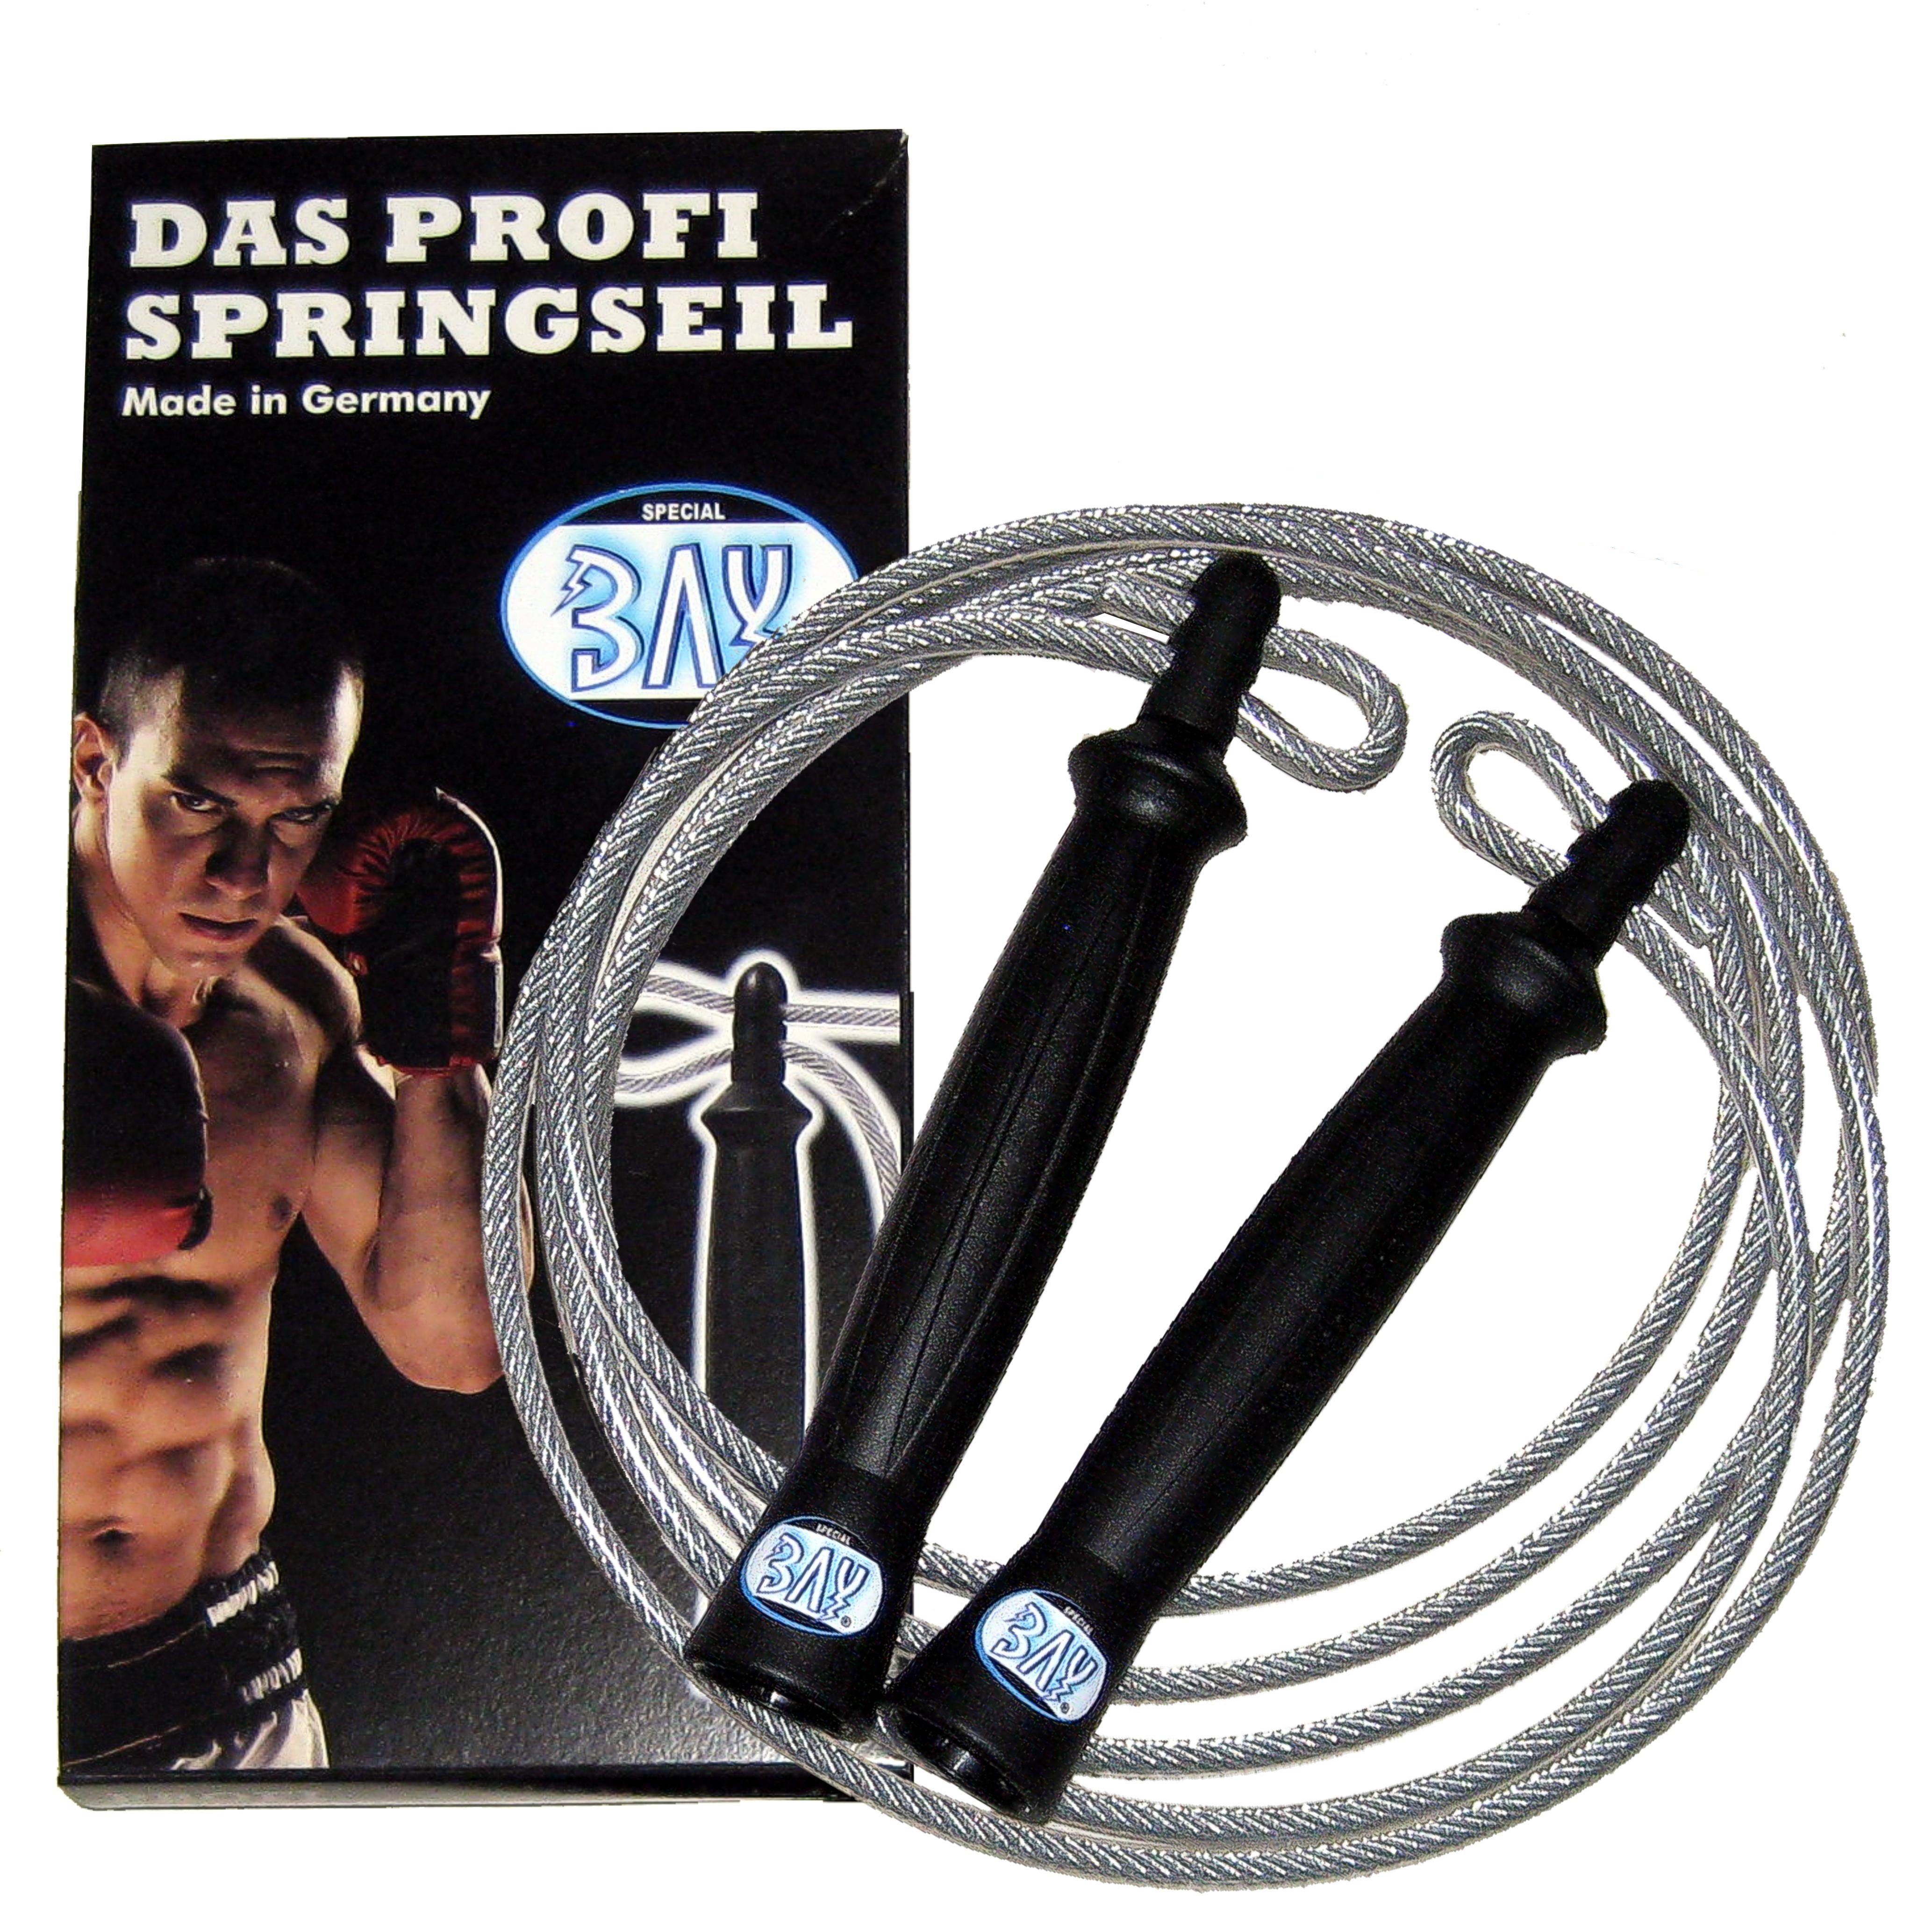 BAY-Sports Springseil Made in Germany Delux 280 Stahl Springseil